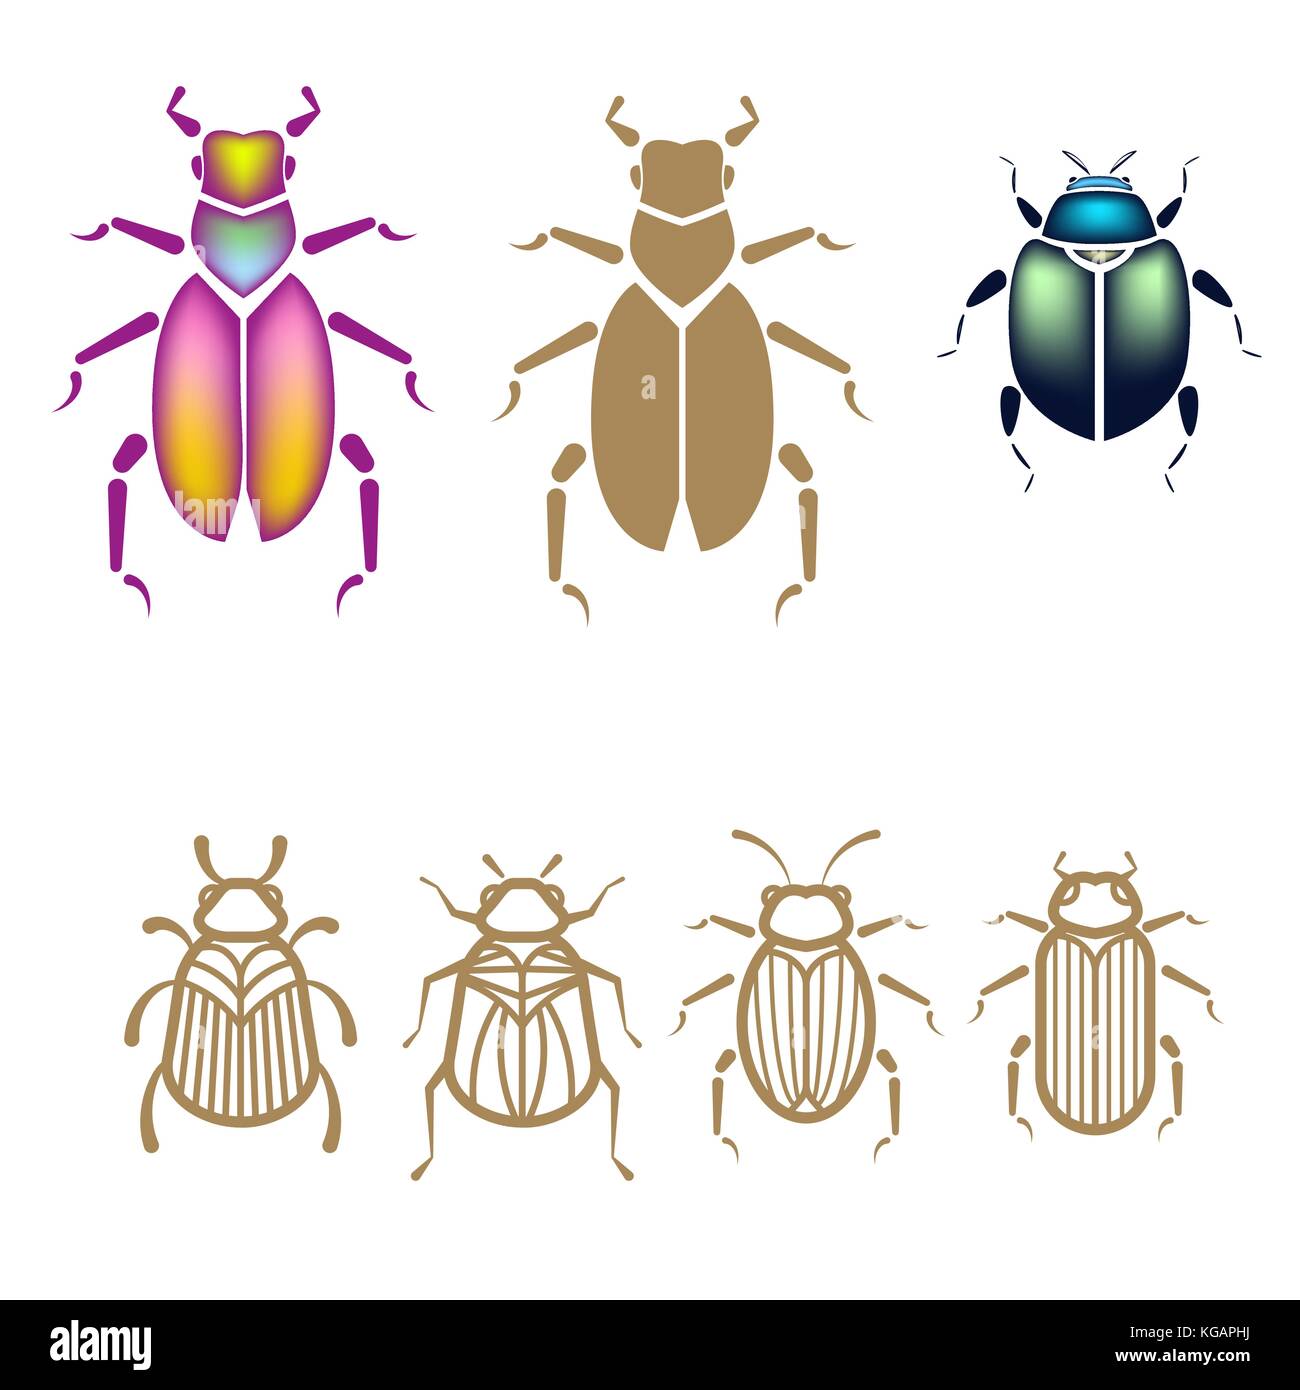 Beetle vector illustration set. Stock Vector